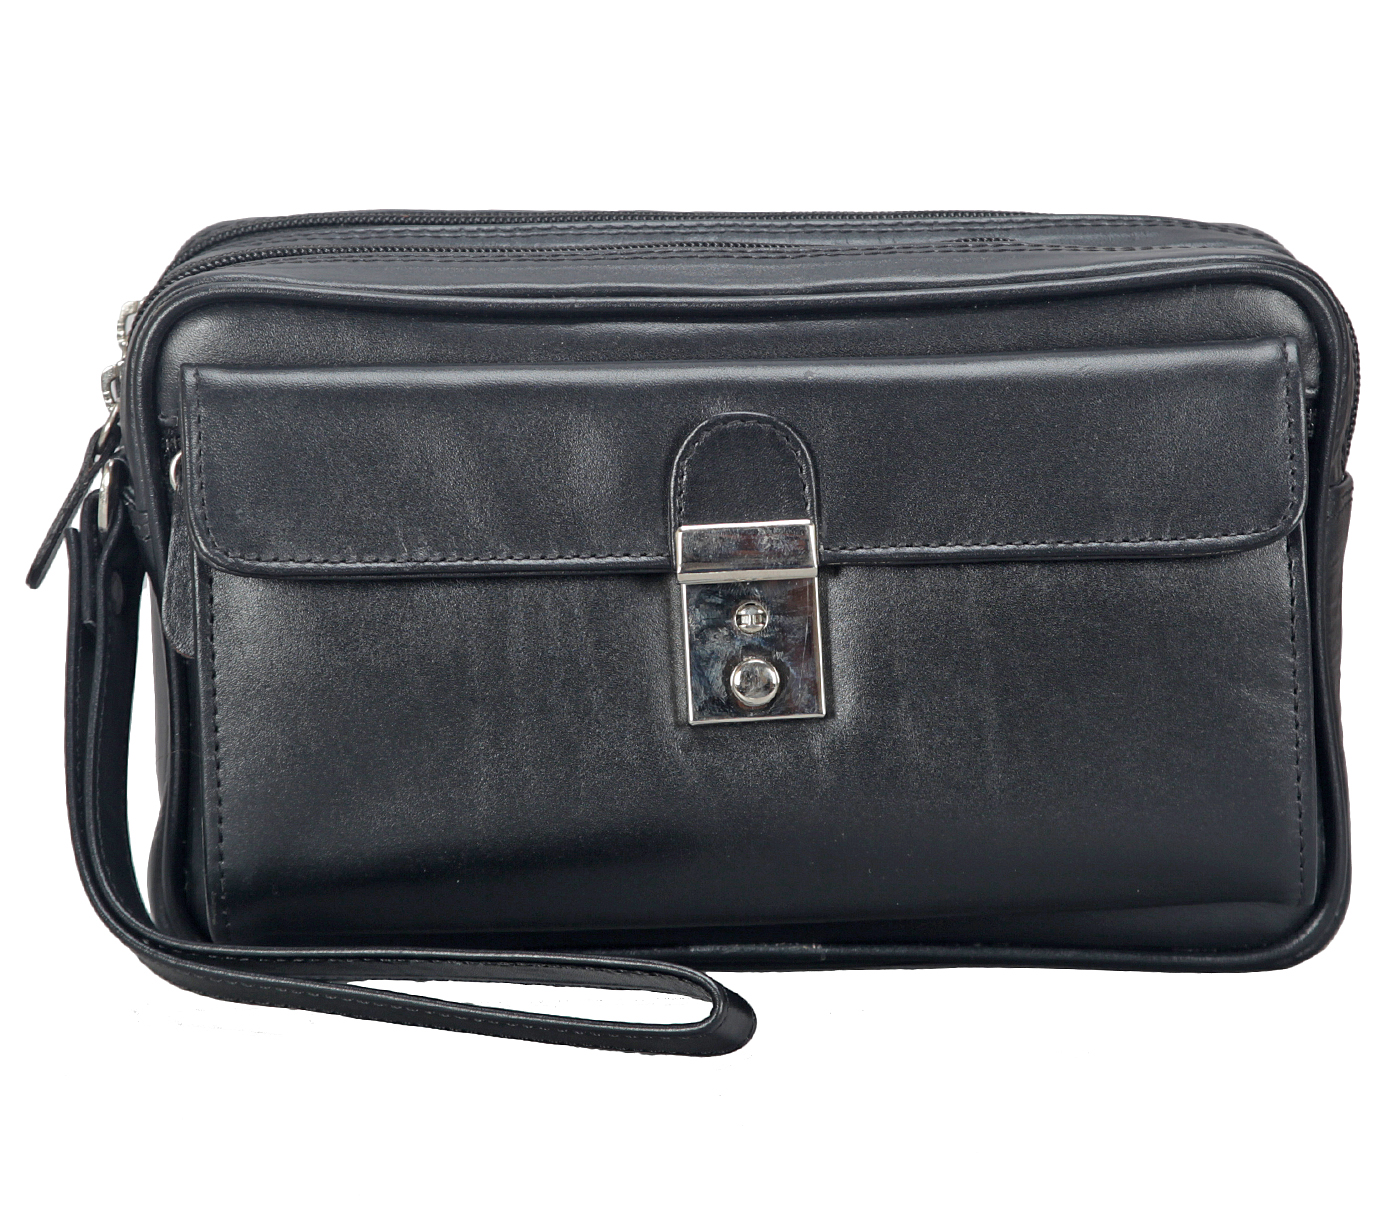  Leather Bag(Black)P36